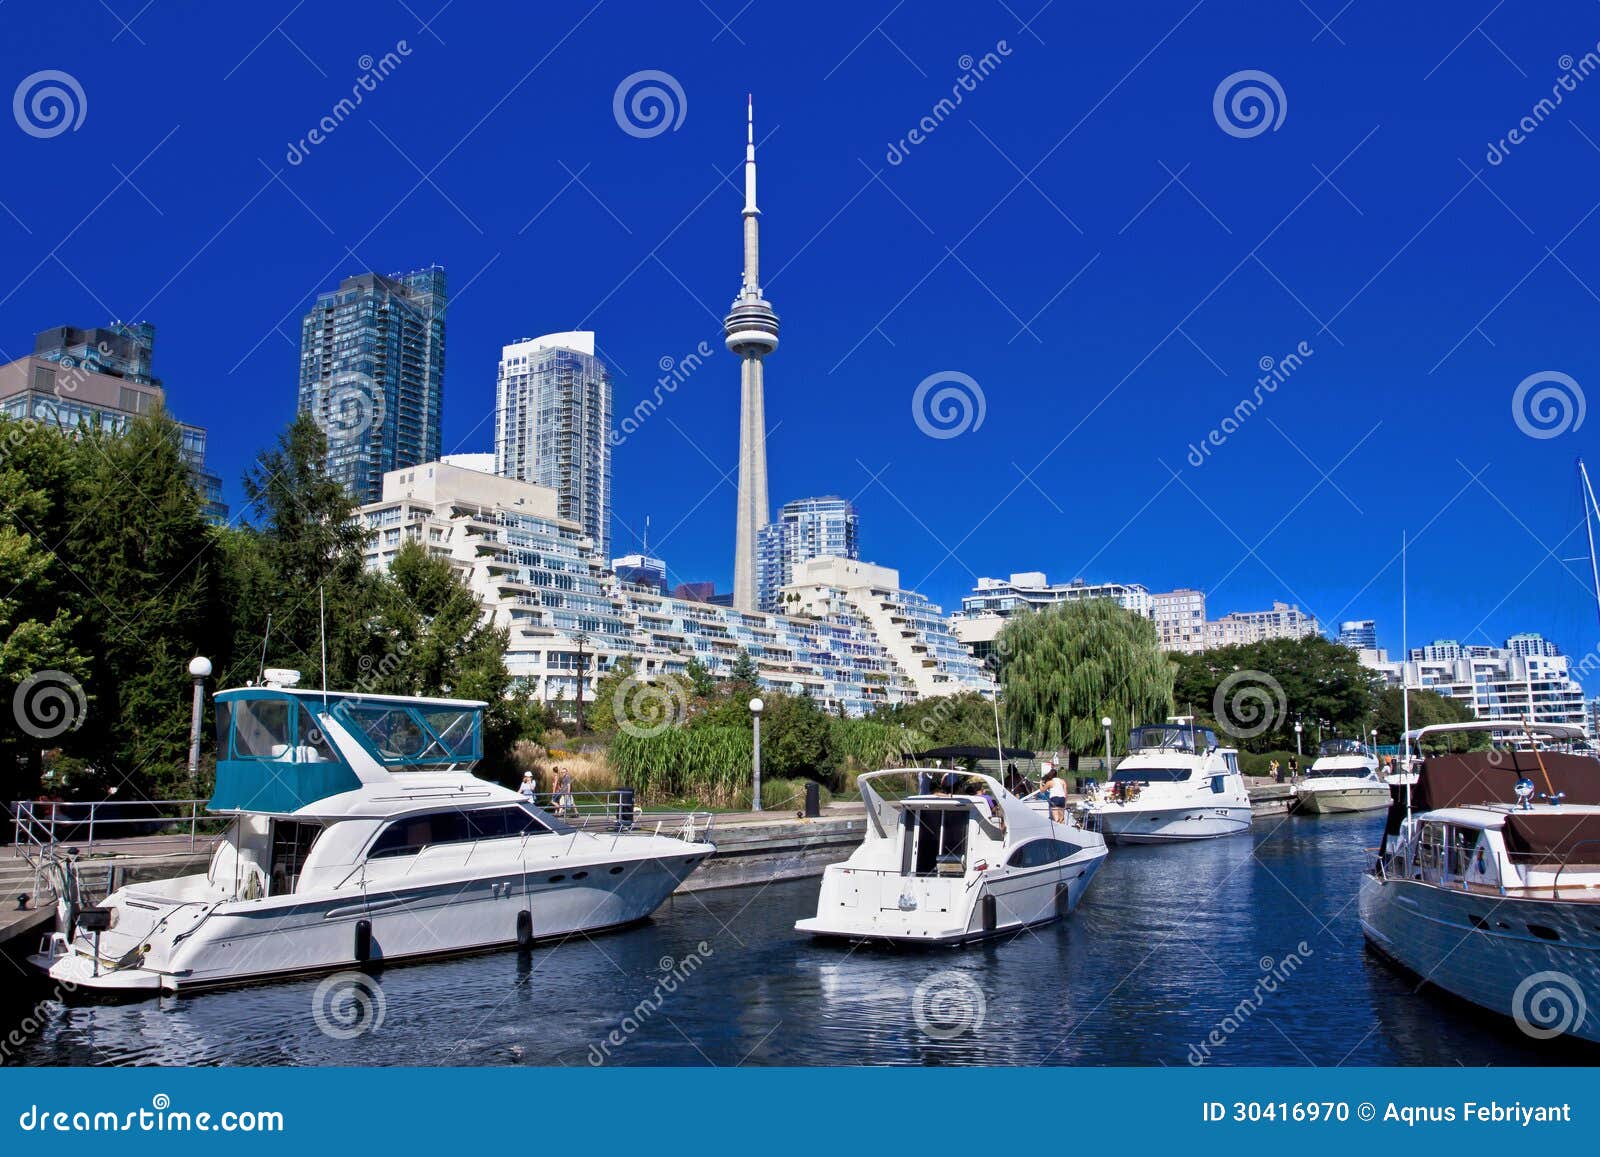 Toronto Waterfront stock photo. Image of public, land ...